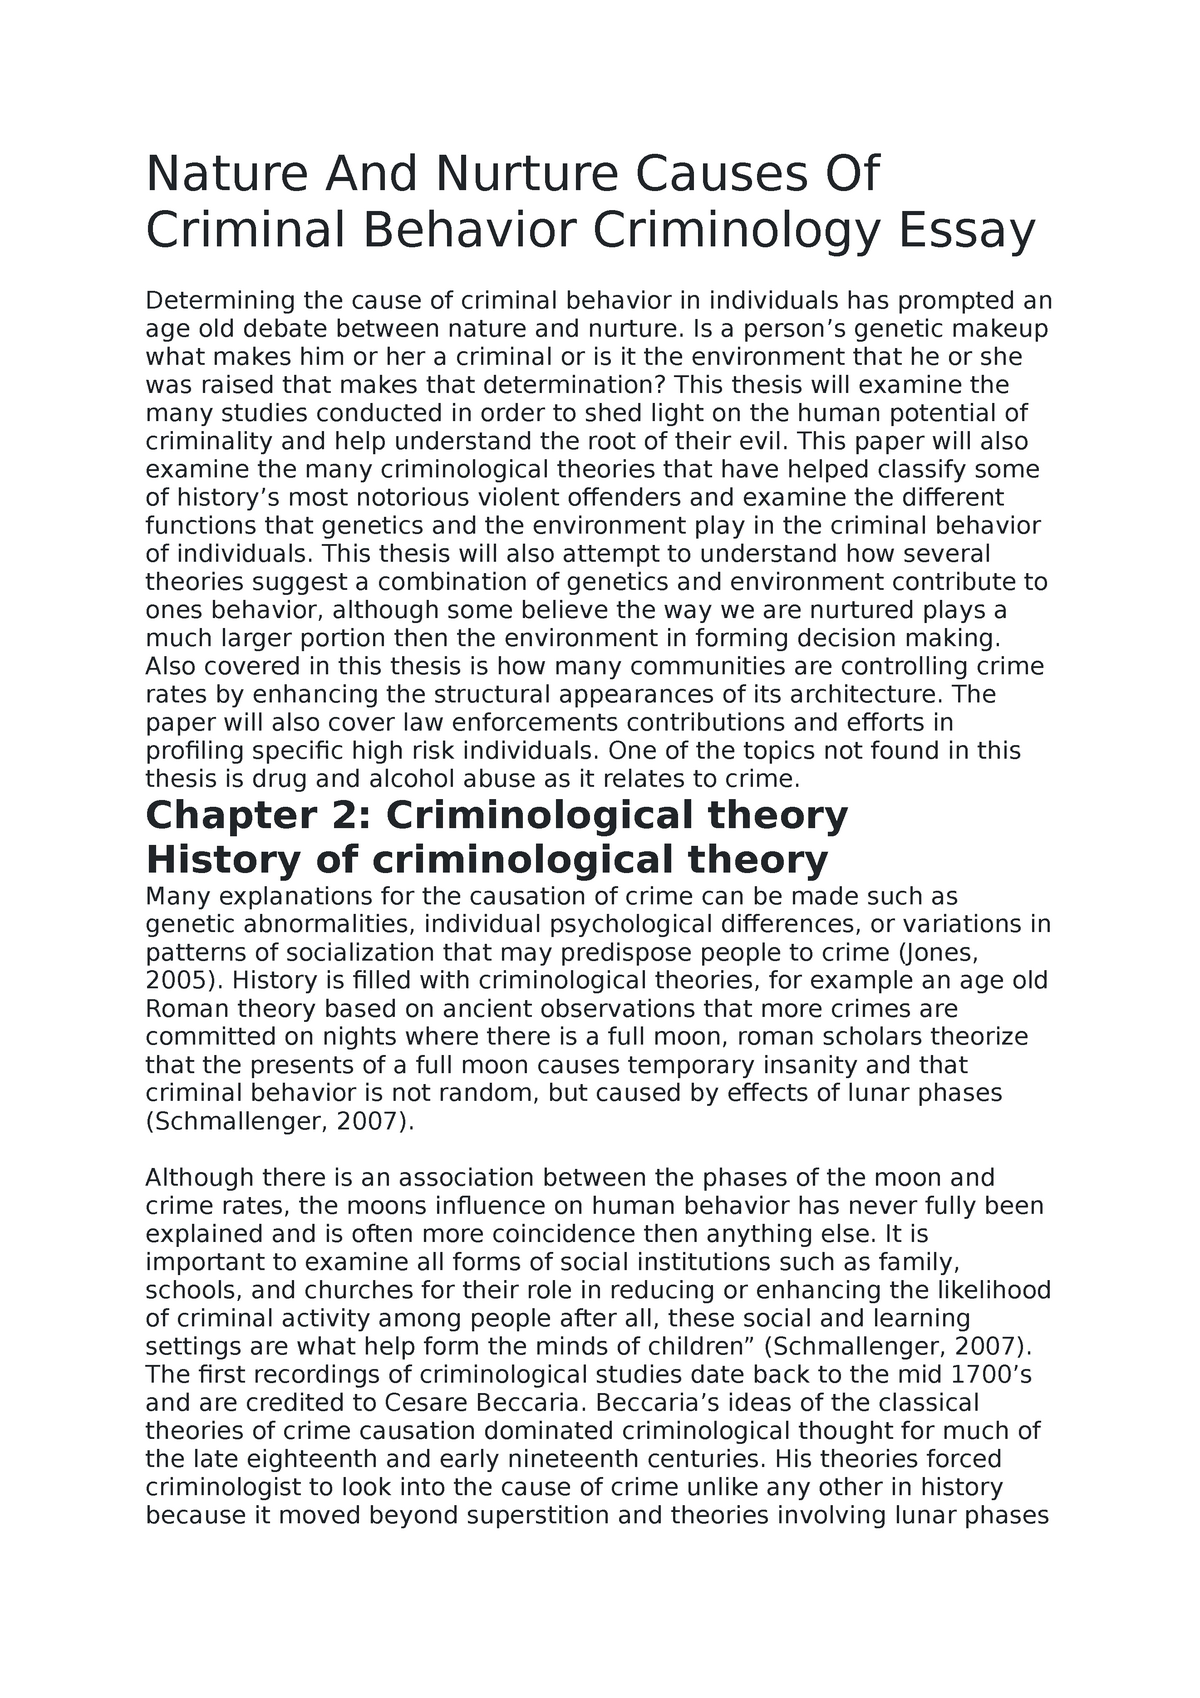 criminal behavior essay